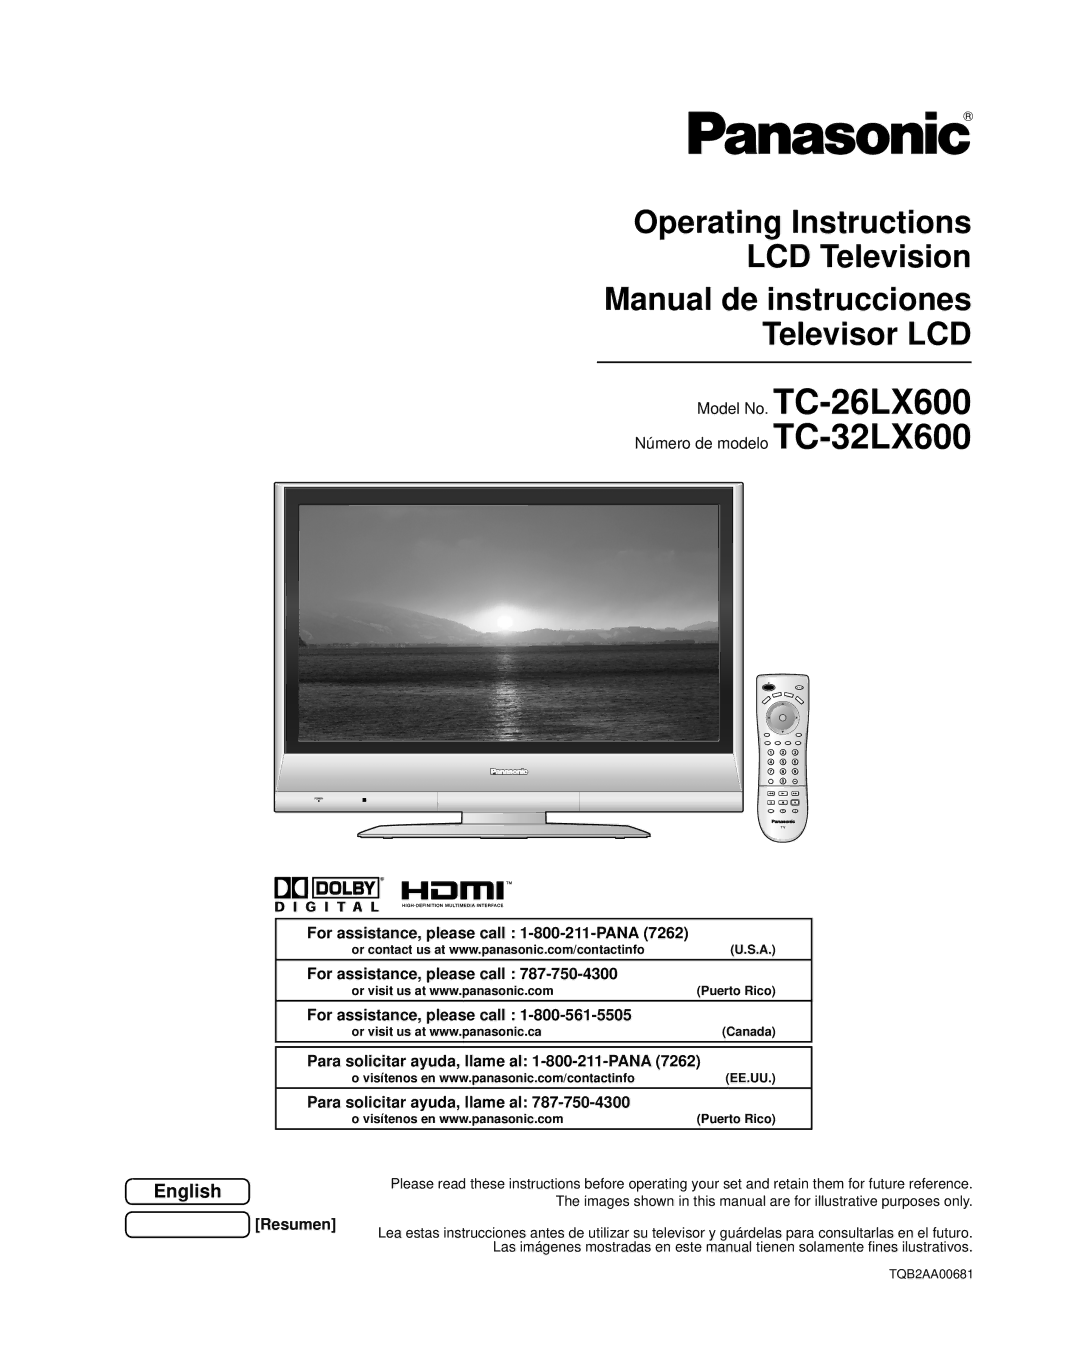 Panasonic TC 26LX600 operating instructions For assistance, please call 1-800-211-PANA, Resumen 